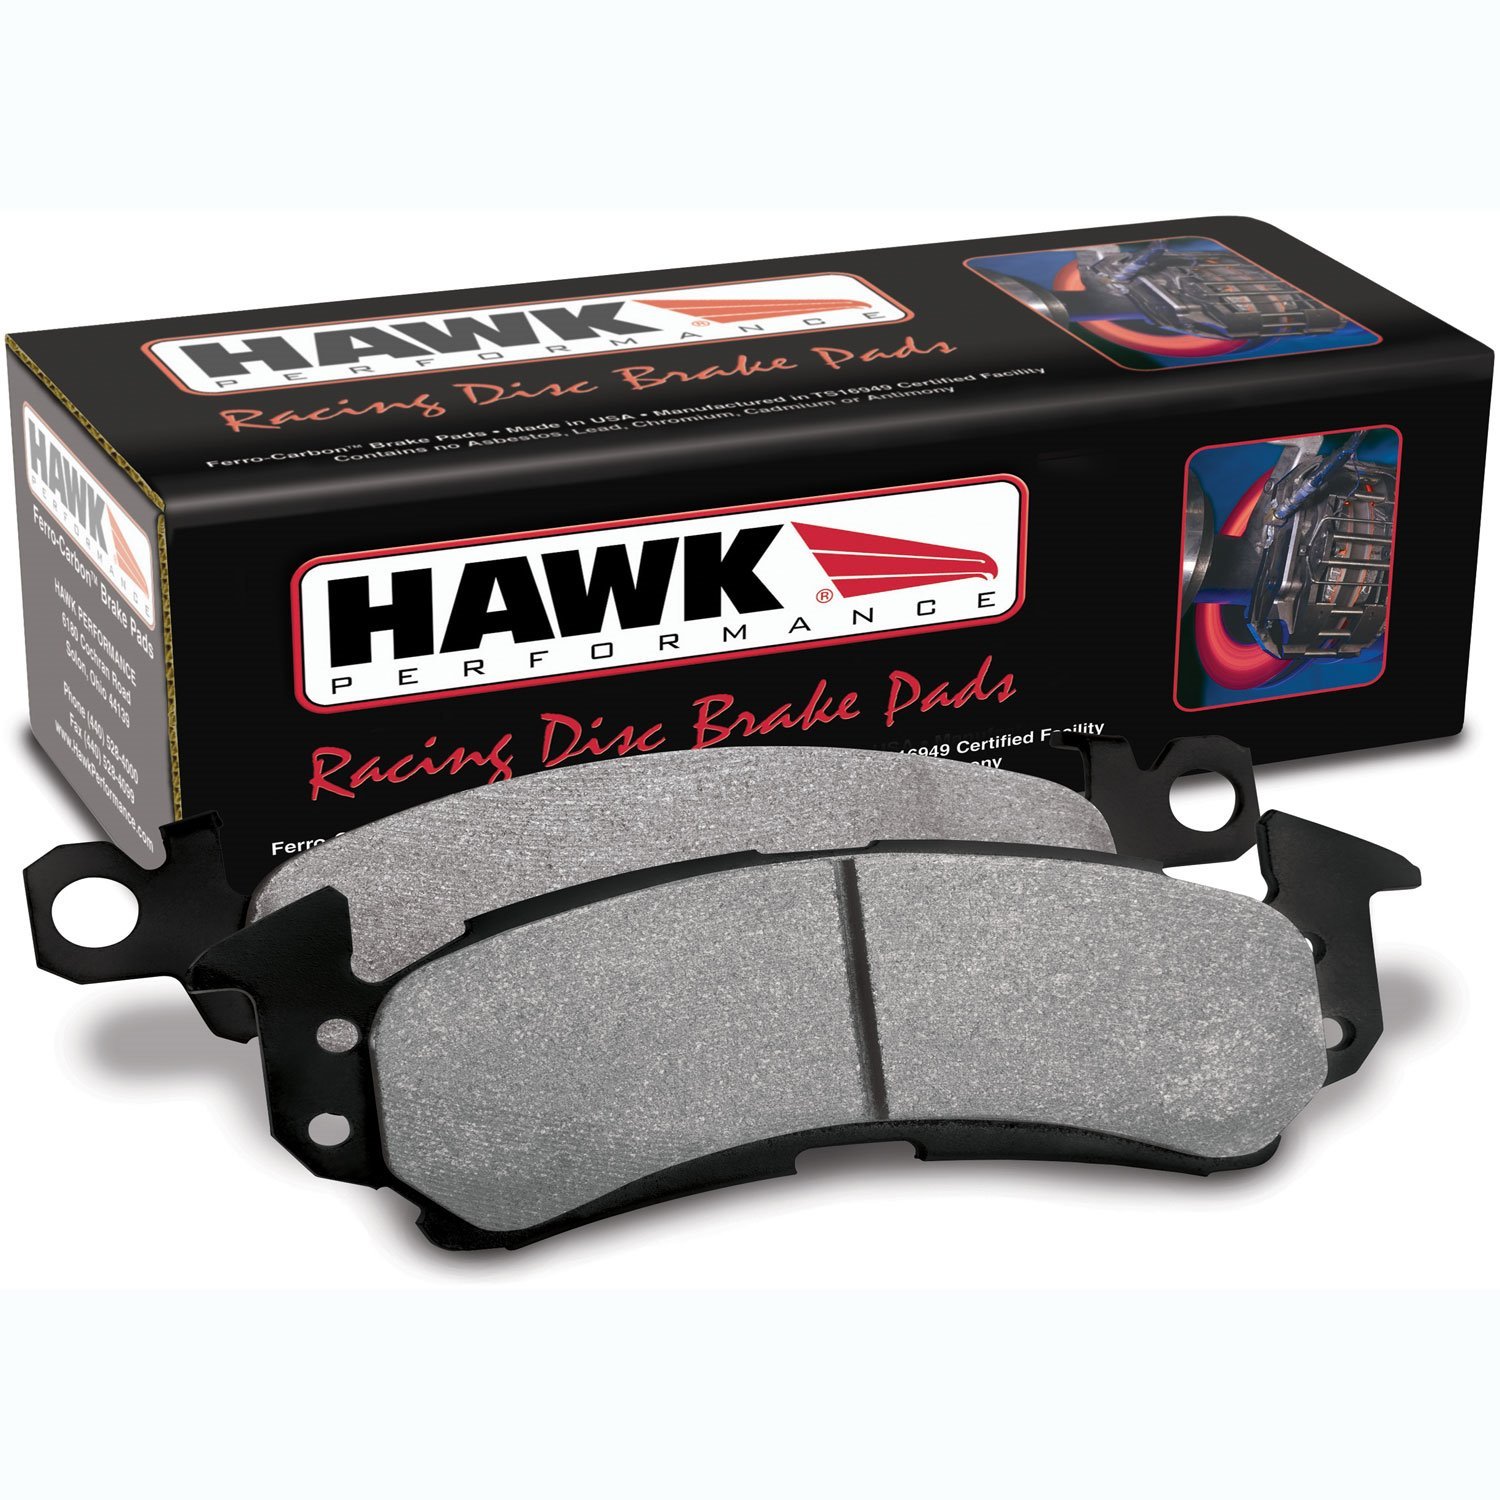 Disc Brake Pad HP Plus w/0.654 Thickness